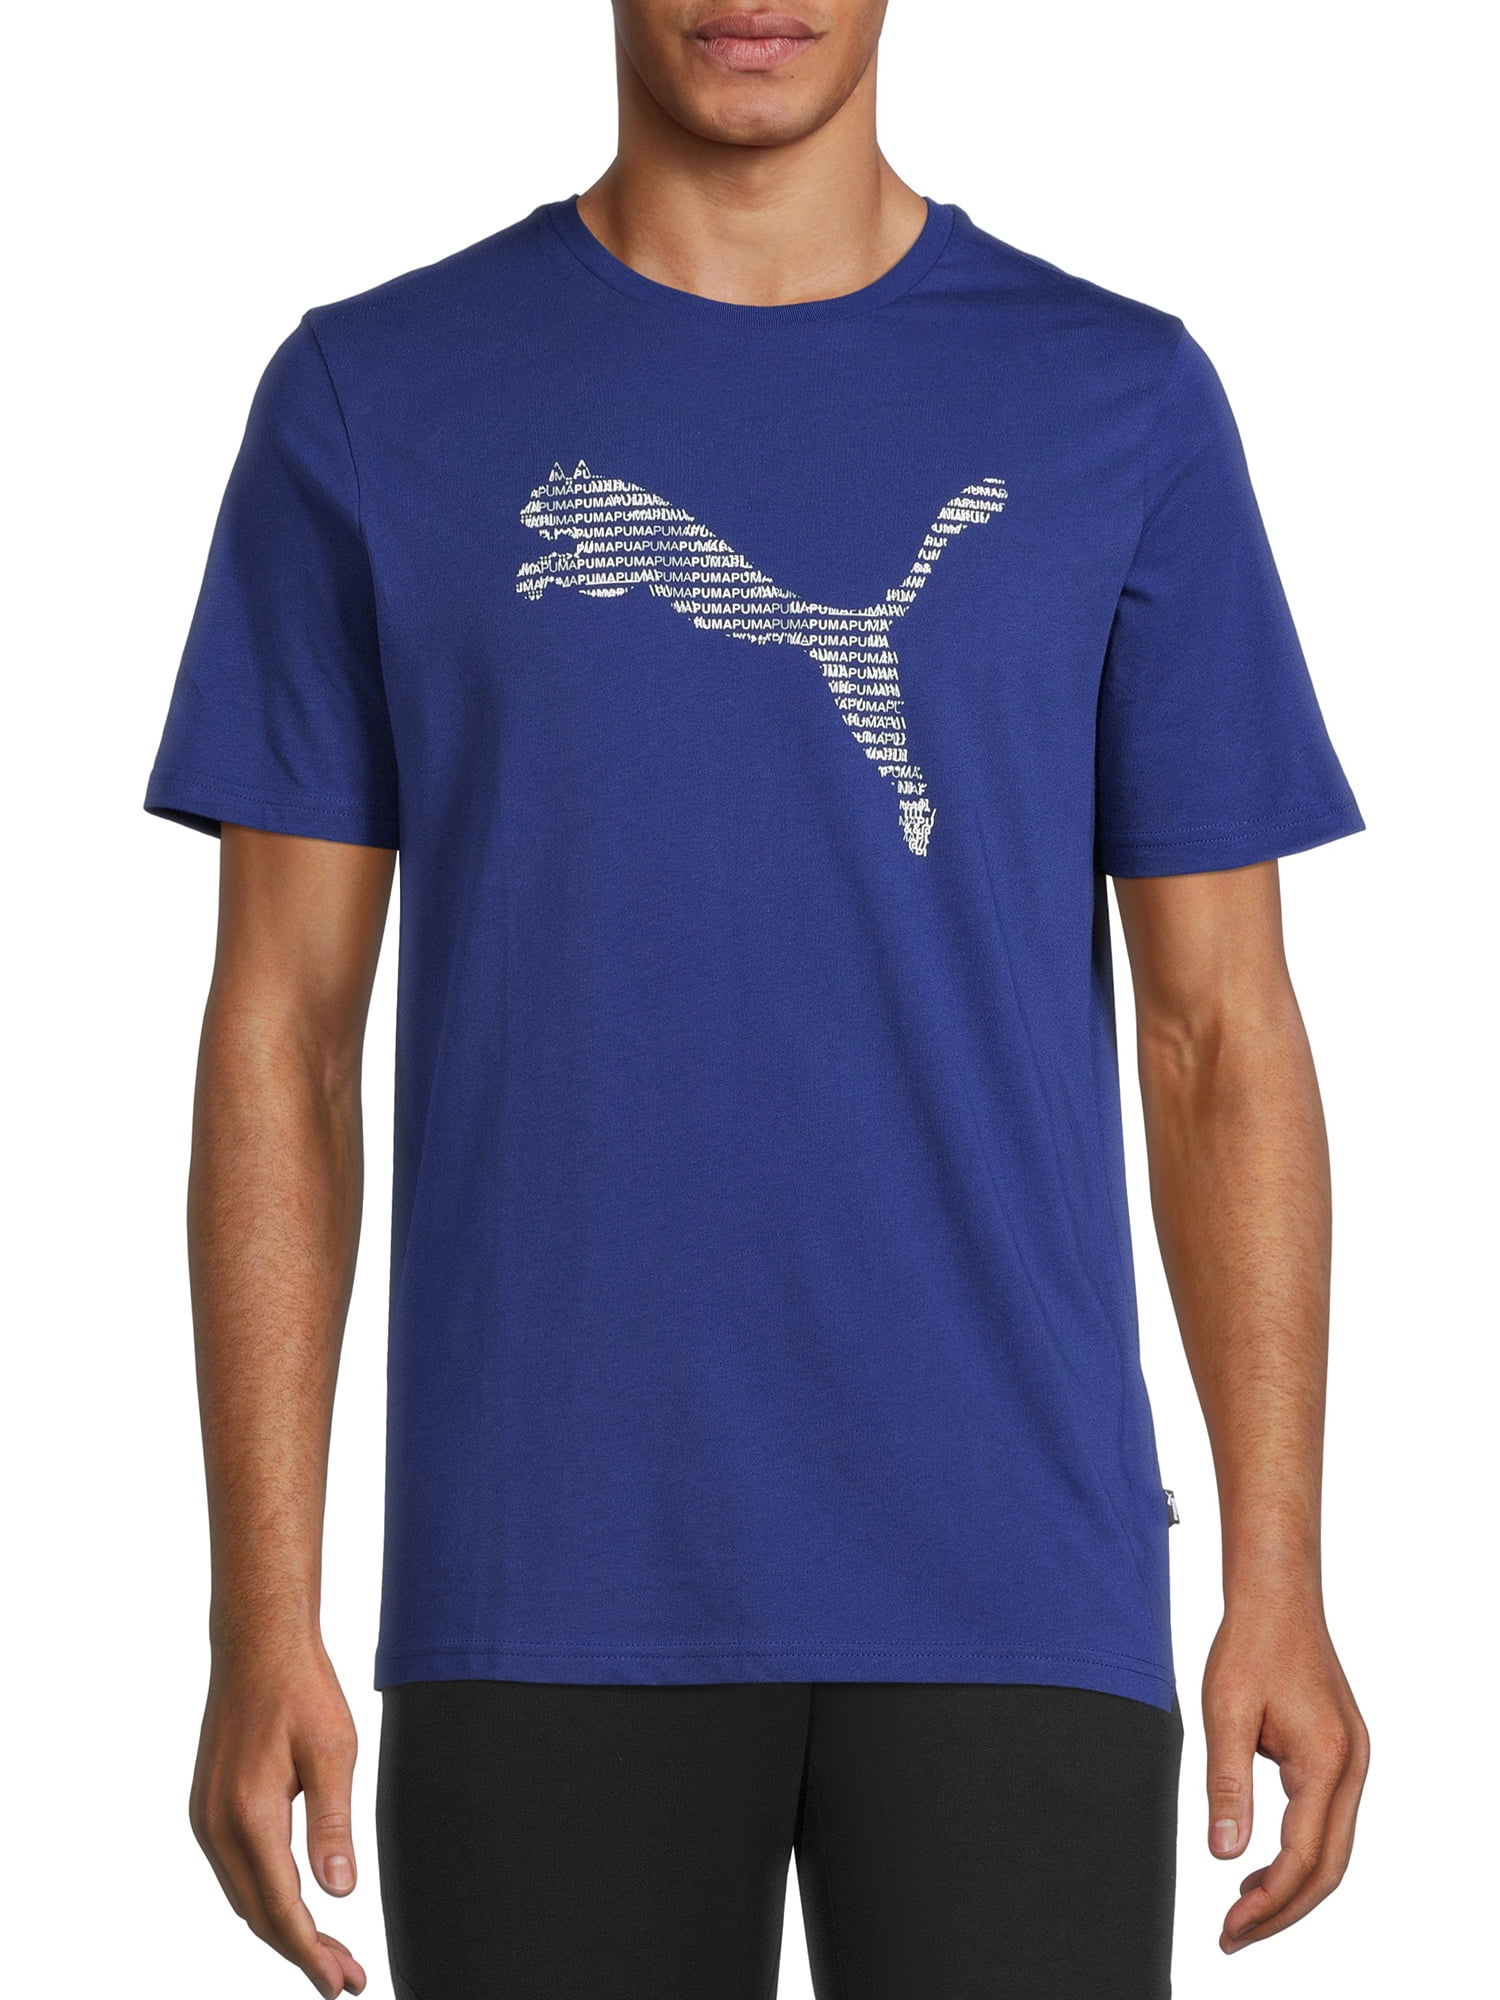 sirene Stevig Actief Puma Men's Basic Cat Logo Tee T-Shirt, up to Size 2XL - Walmart.com